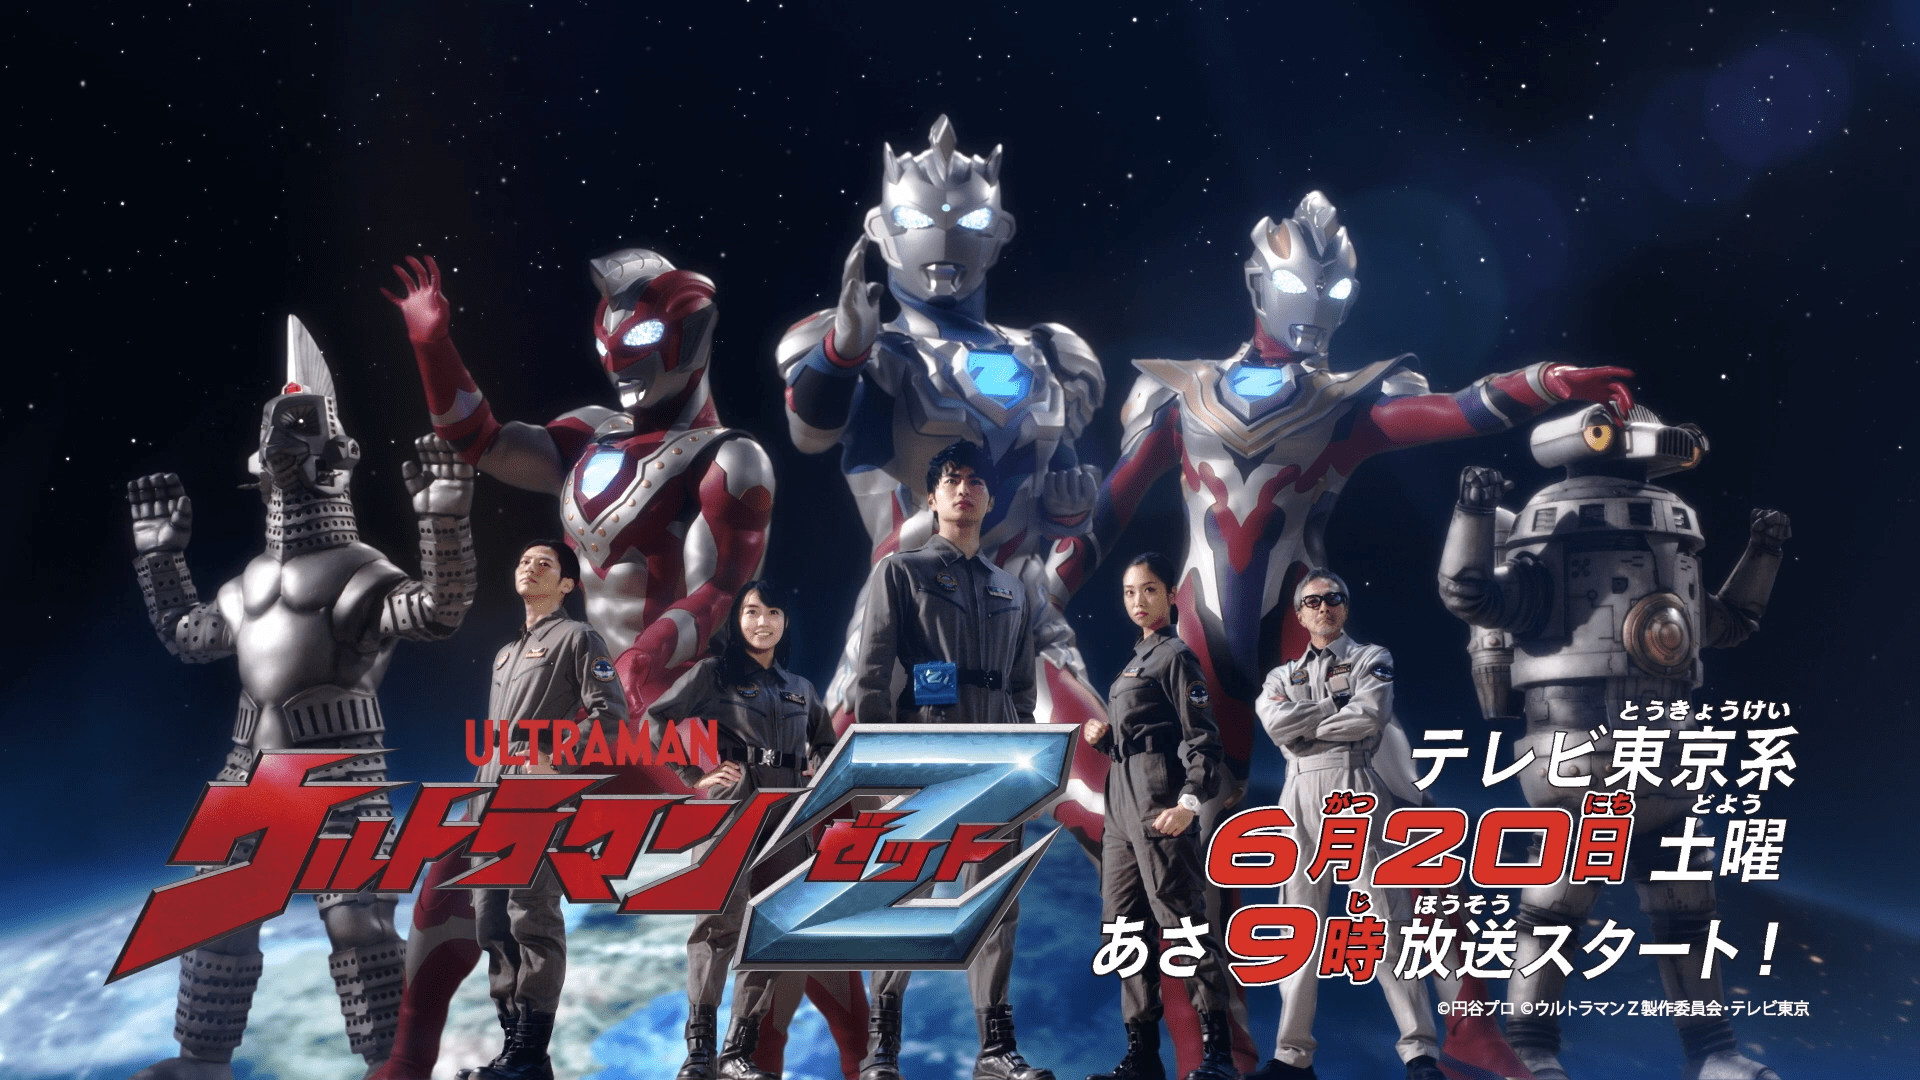 Ultraman Z “Special Movie” Series